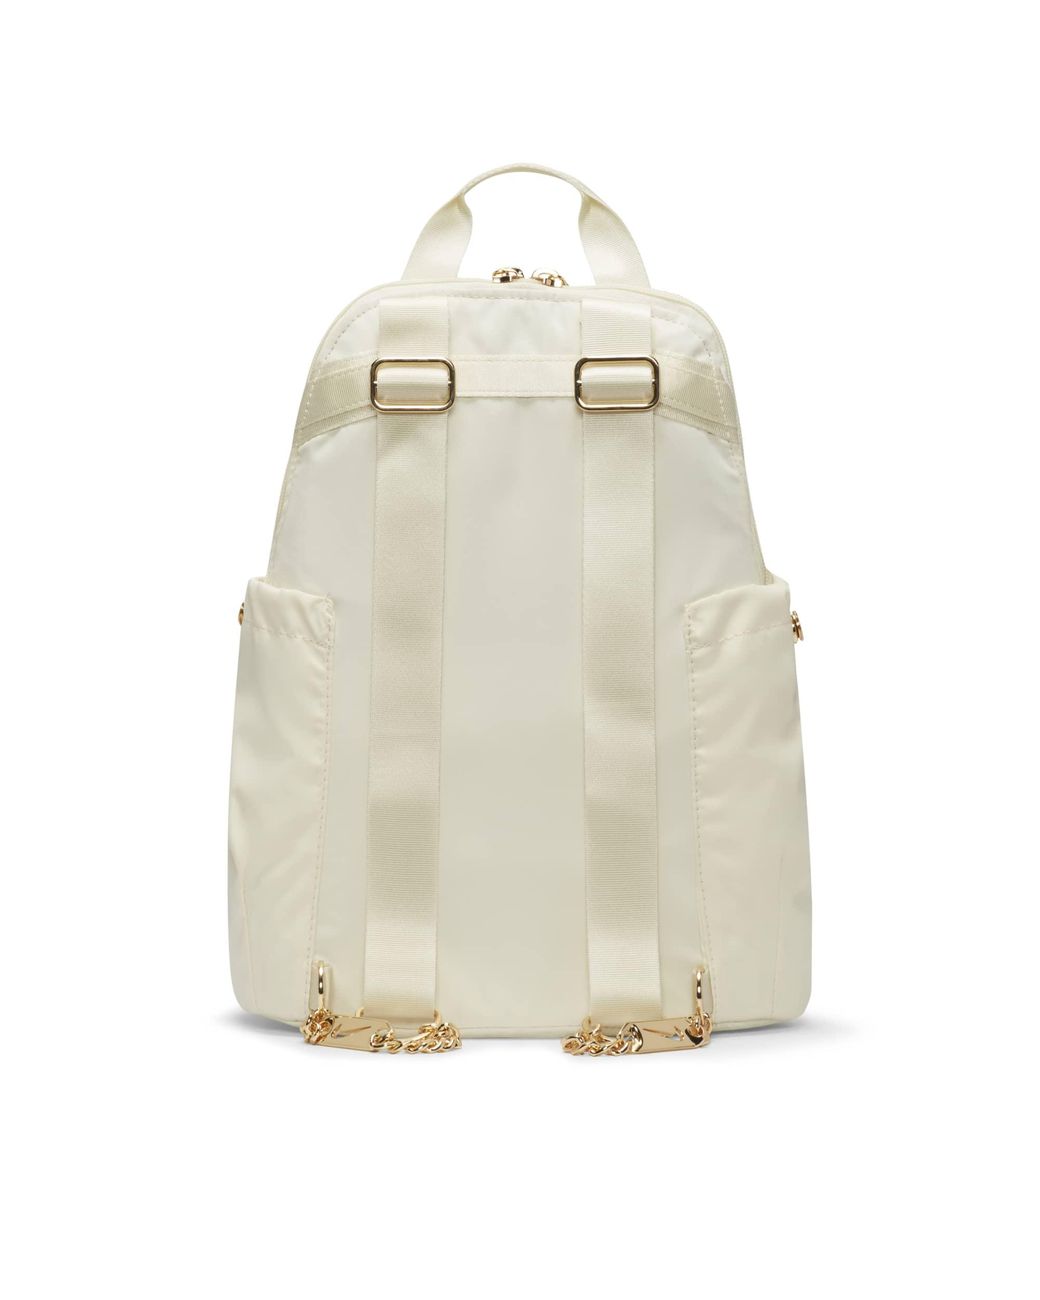 Nike Sportswear Futura Luxe Mini Backpack-White